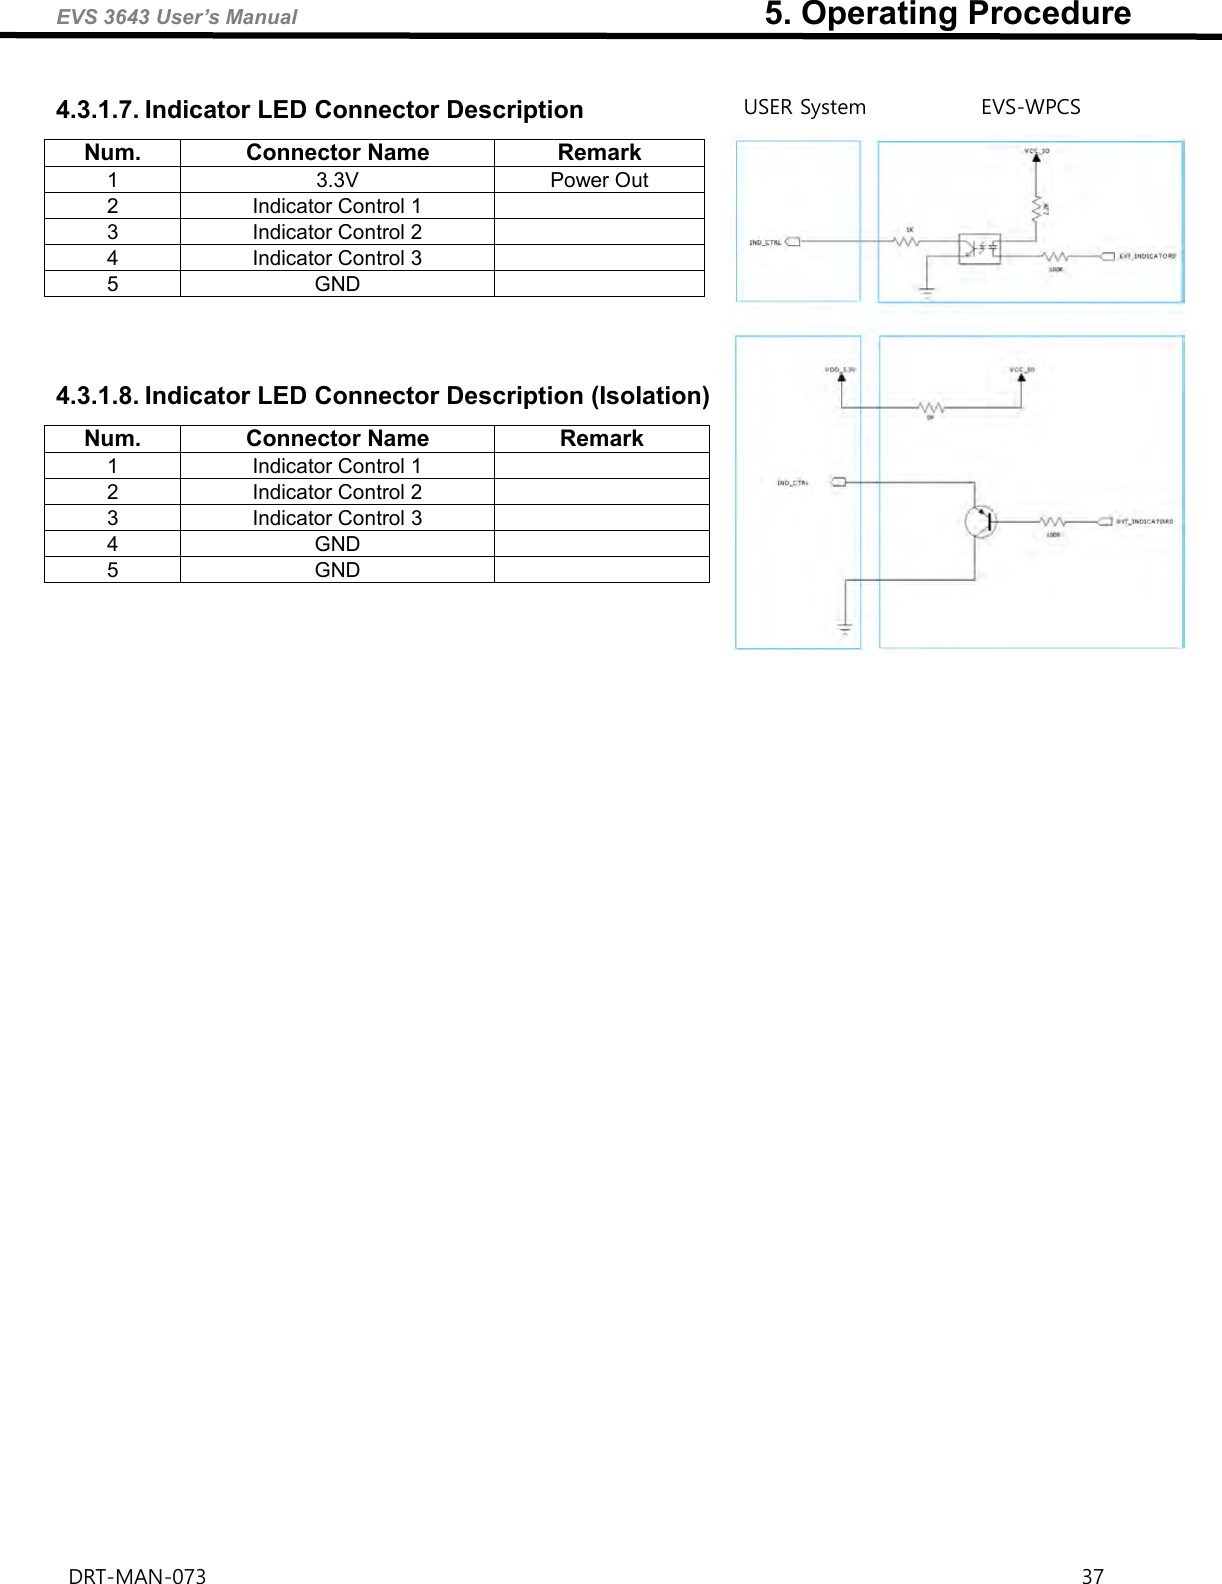 EVS 3643 User’s Manual                                                        5. Operating Procedure DRT-MAN-073                                                                                                                                                                37   4.3.1.7. Indicator LED Connector Description Num. Connector Name Remark 1 3.3V Power Out 2 Indicator Control 1  3 Indicator Control 2  4 Indicator Control 3  5 GND    4.3.1.8. Indicator LED Connector Description (Isolation) Num. Connector Name Remark 1 Indicator Control 1  2 Indicator Control 2  3 Indicator Control 3  4 GND  5 GND       USER System                     EVS-WPCS 